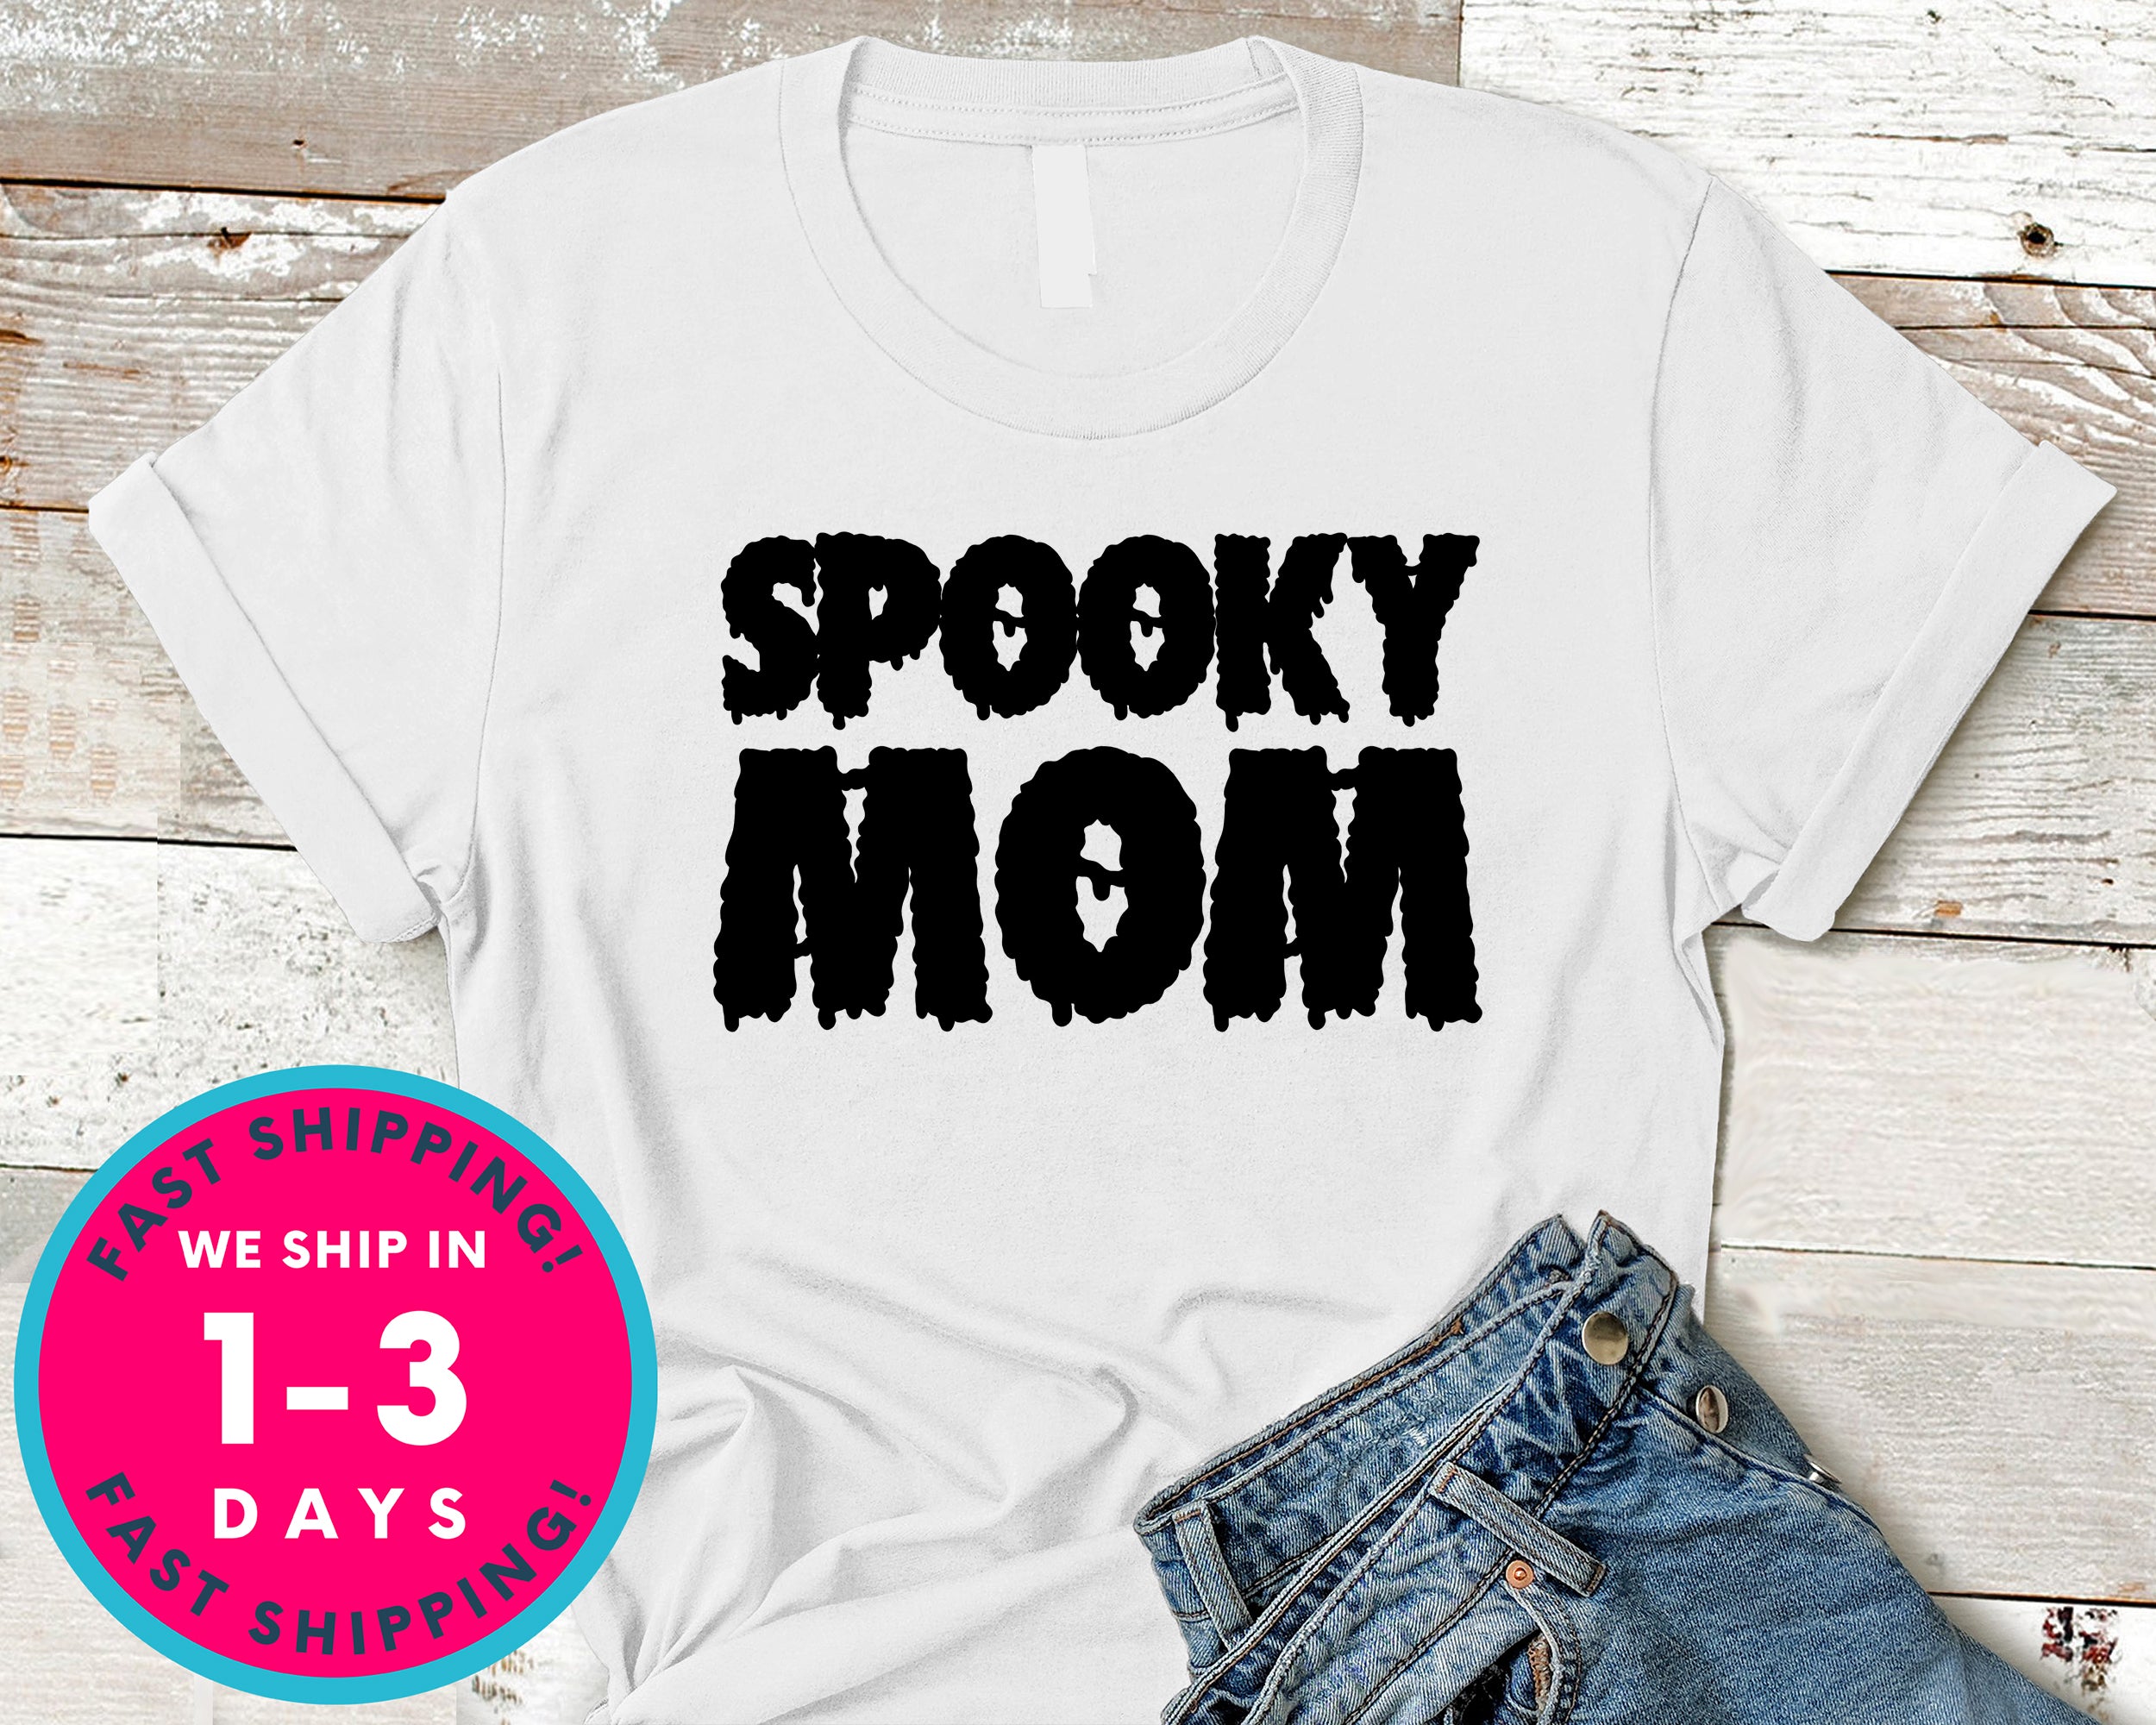 Spooky Mom (couple Tee) T-Shirt - Halloween Horror Scary Shirt